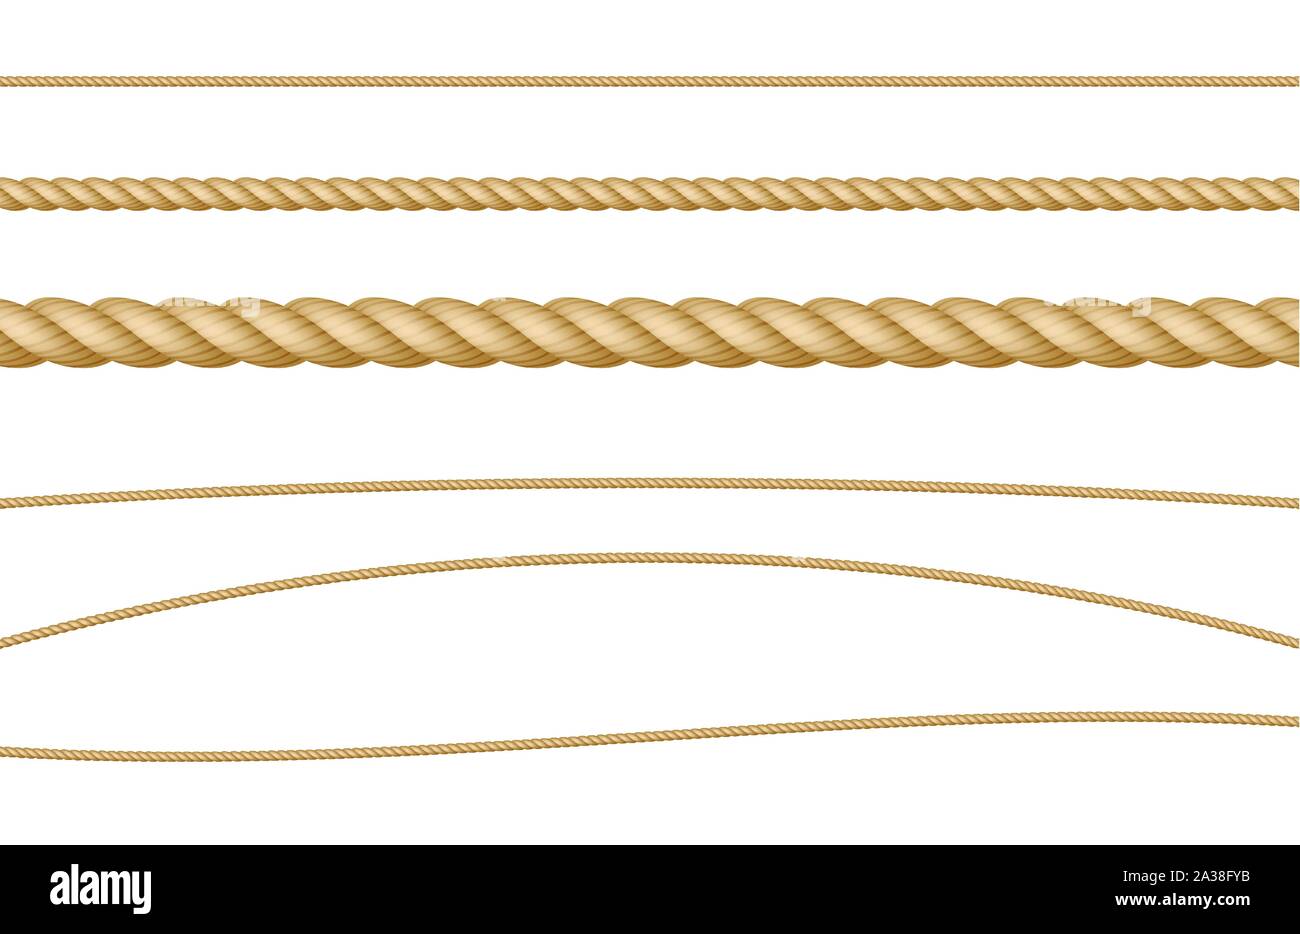 https://c8.alamy.com/comp/2A38FYB/rope-string-natural-realistic-vector-illustration-set-2A38FYB.jpg